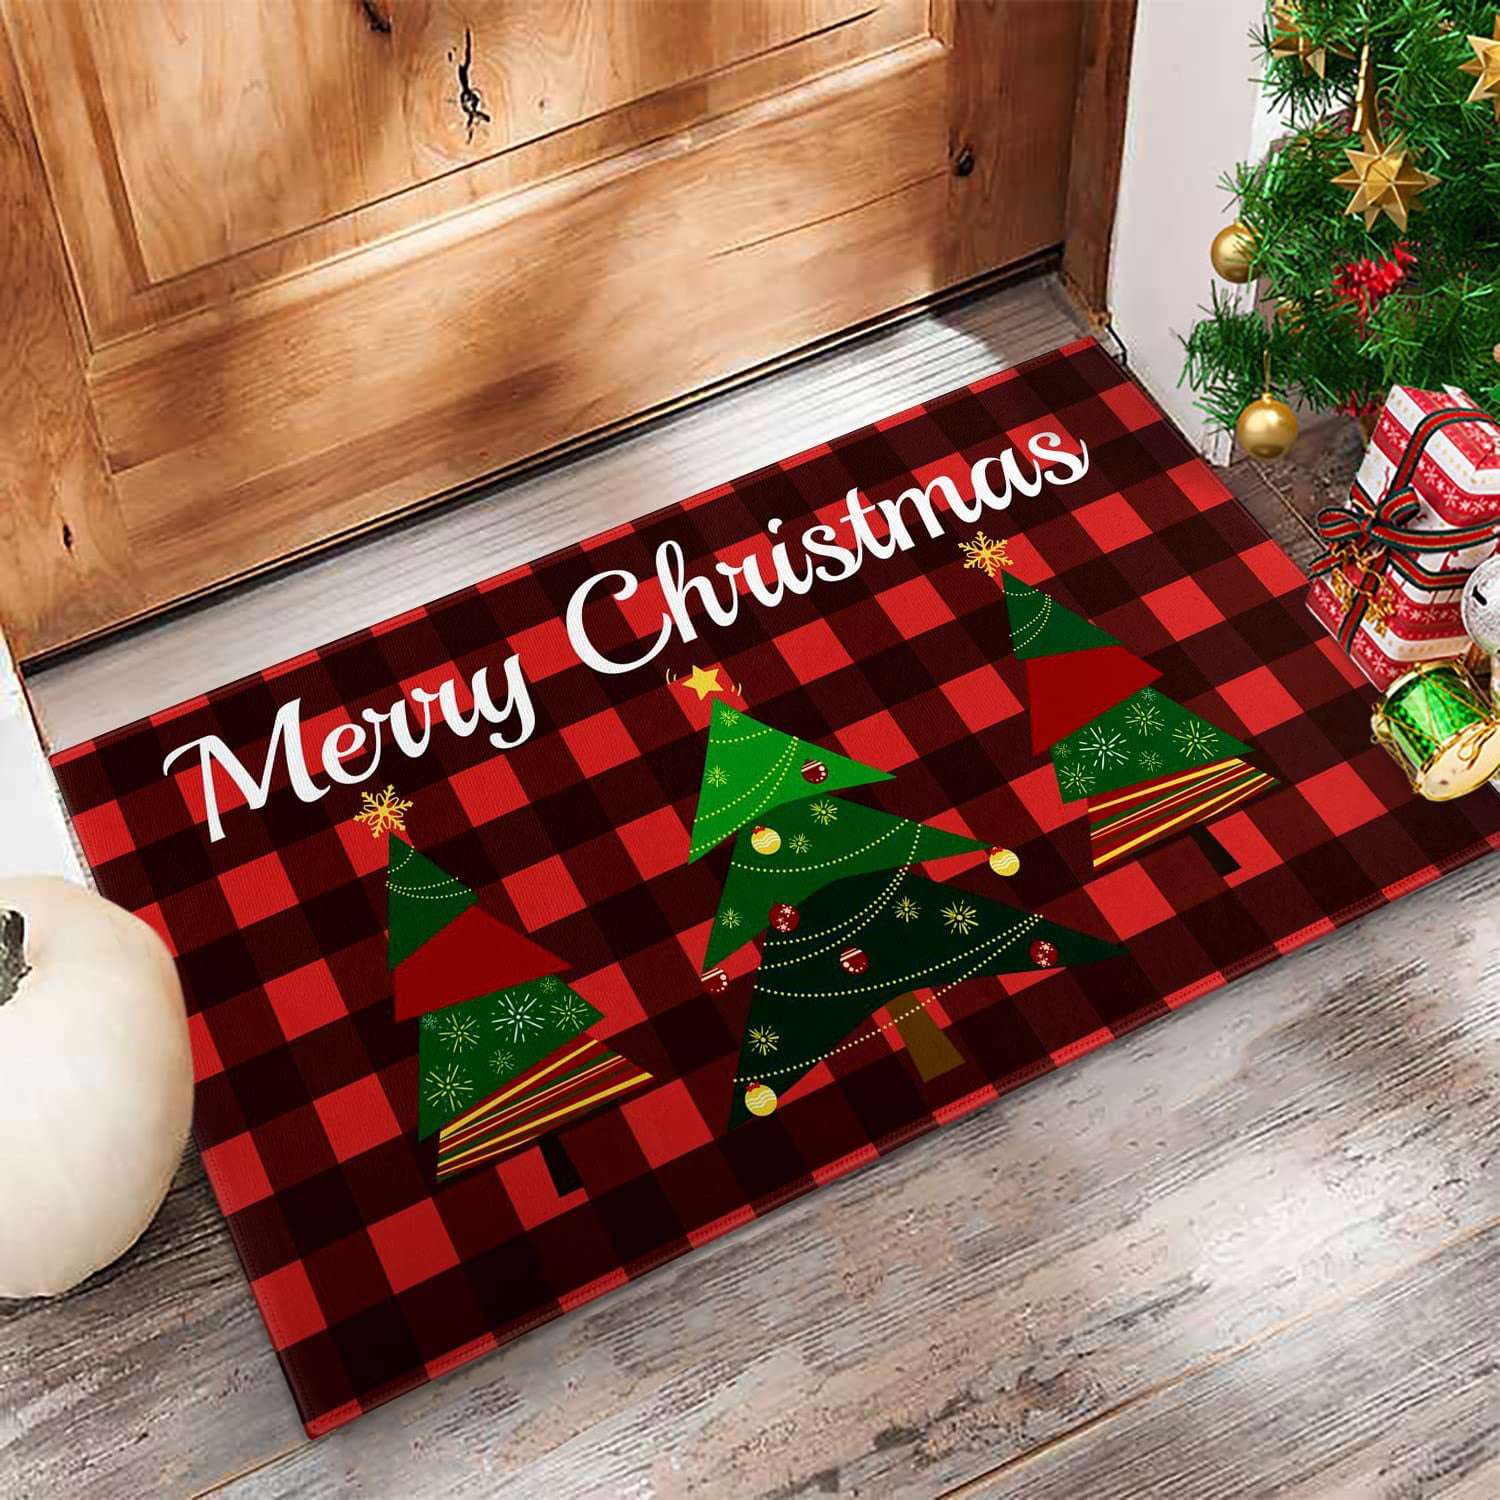 Indoor Doormat Front Door Mats,Christmas Dwarf Red Buffalo Plaid Water  Absorbent Non Slip Entrance Rugs,Winter Snowflake Green Tree Gift Floor  Bath